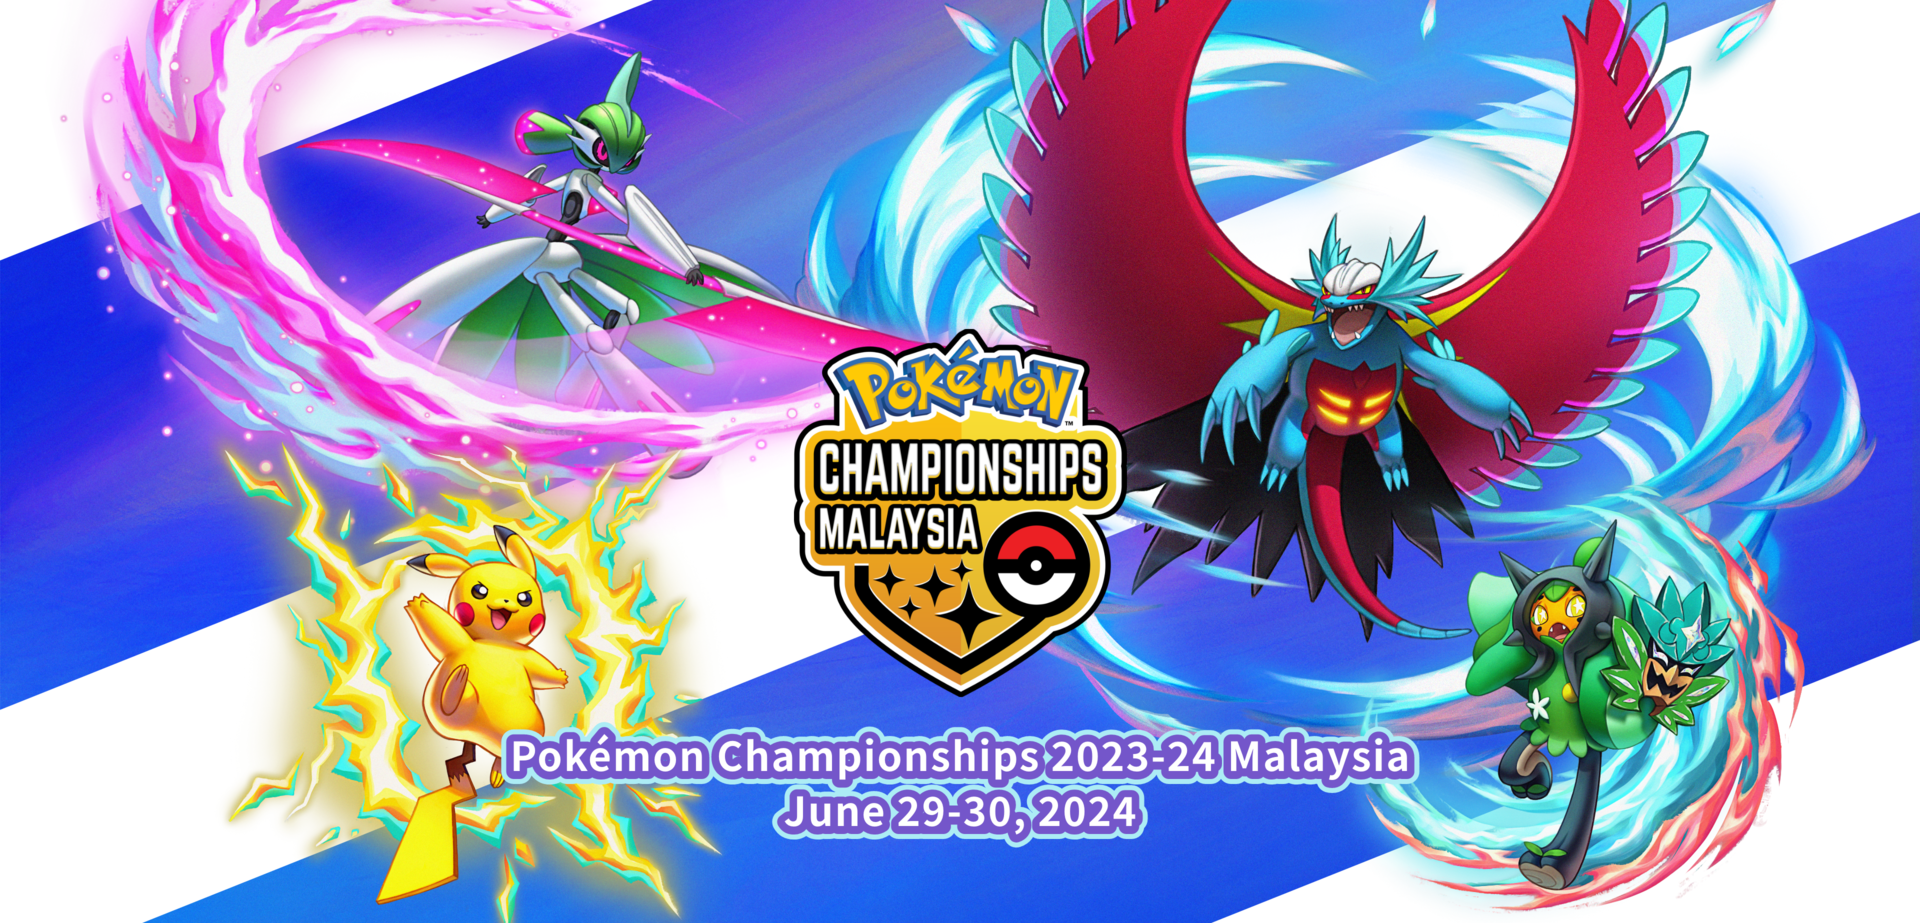 Pokemon_Kempen / Event_Pokémon Championships 2023-2024 Malaysia	